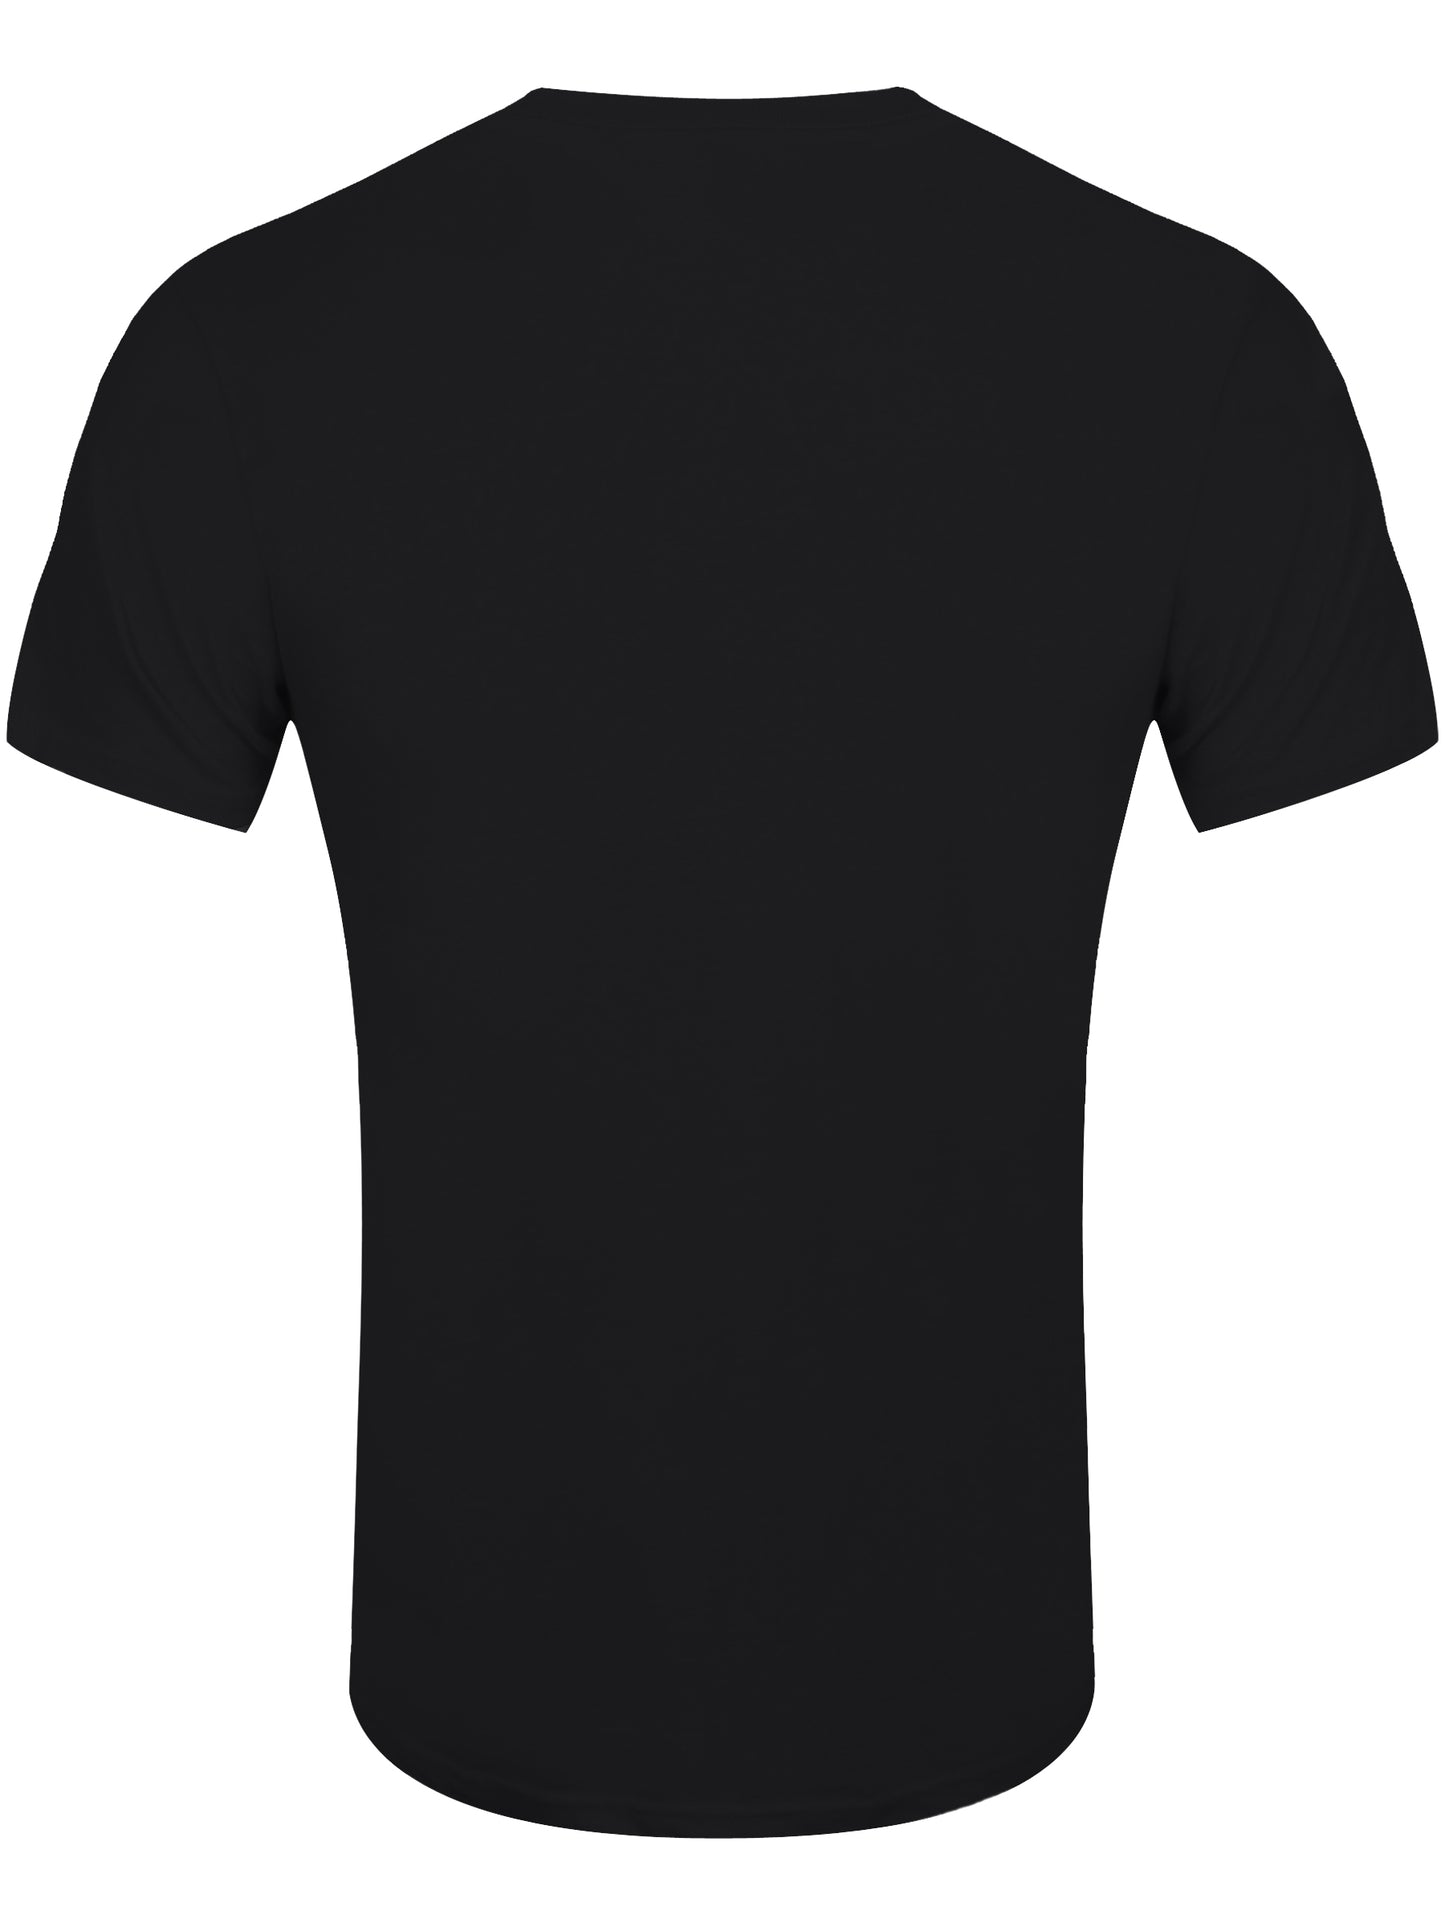 Five Finger Death Punch Eagle Men's Black T-Shirt